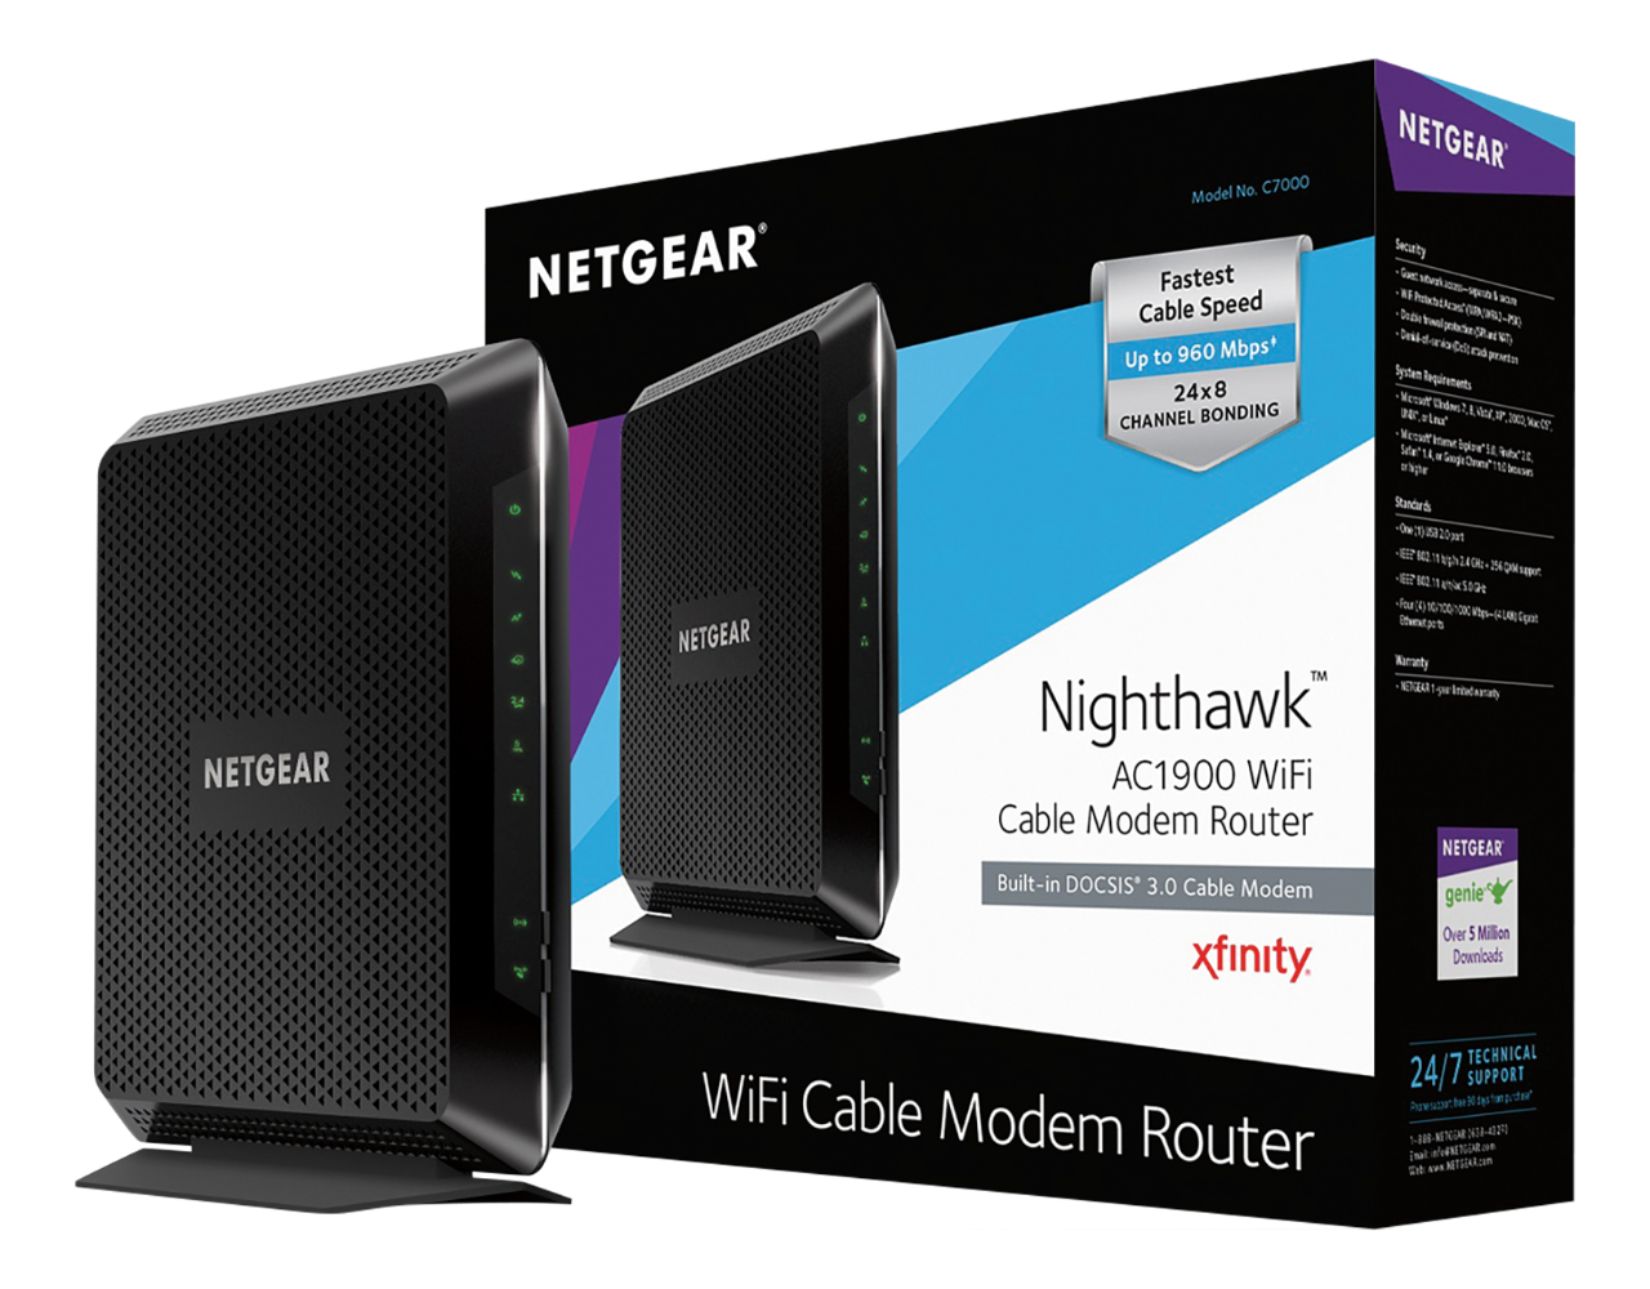 NETGEAR Nighthawk AC1900 (Model: C7000-NAS) Modem Router Combo (Xfinity-version) $159